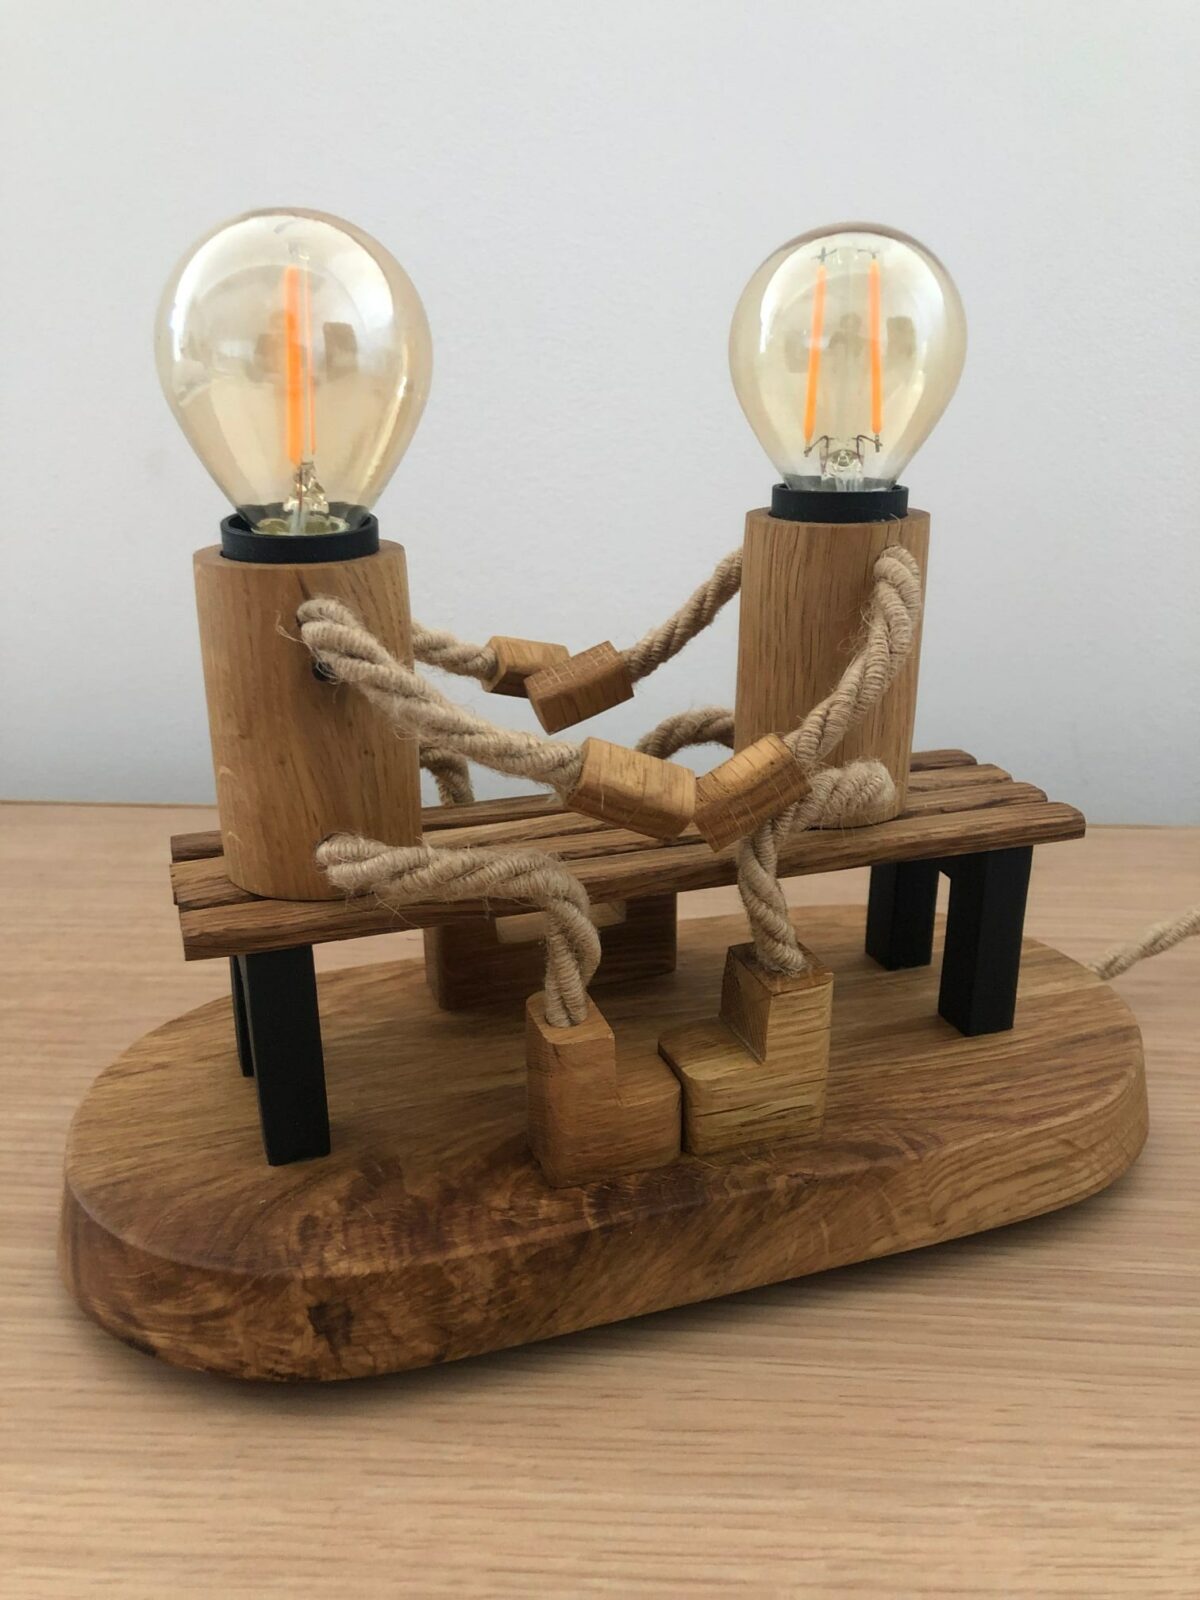 Creative Lamps Of Light Bulb Head Figures By Ivan Cvitkovic 18